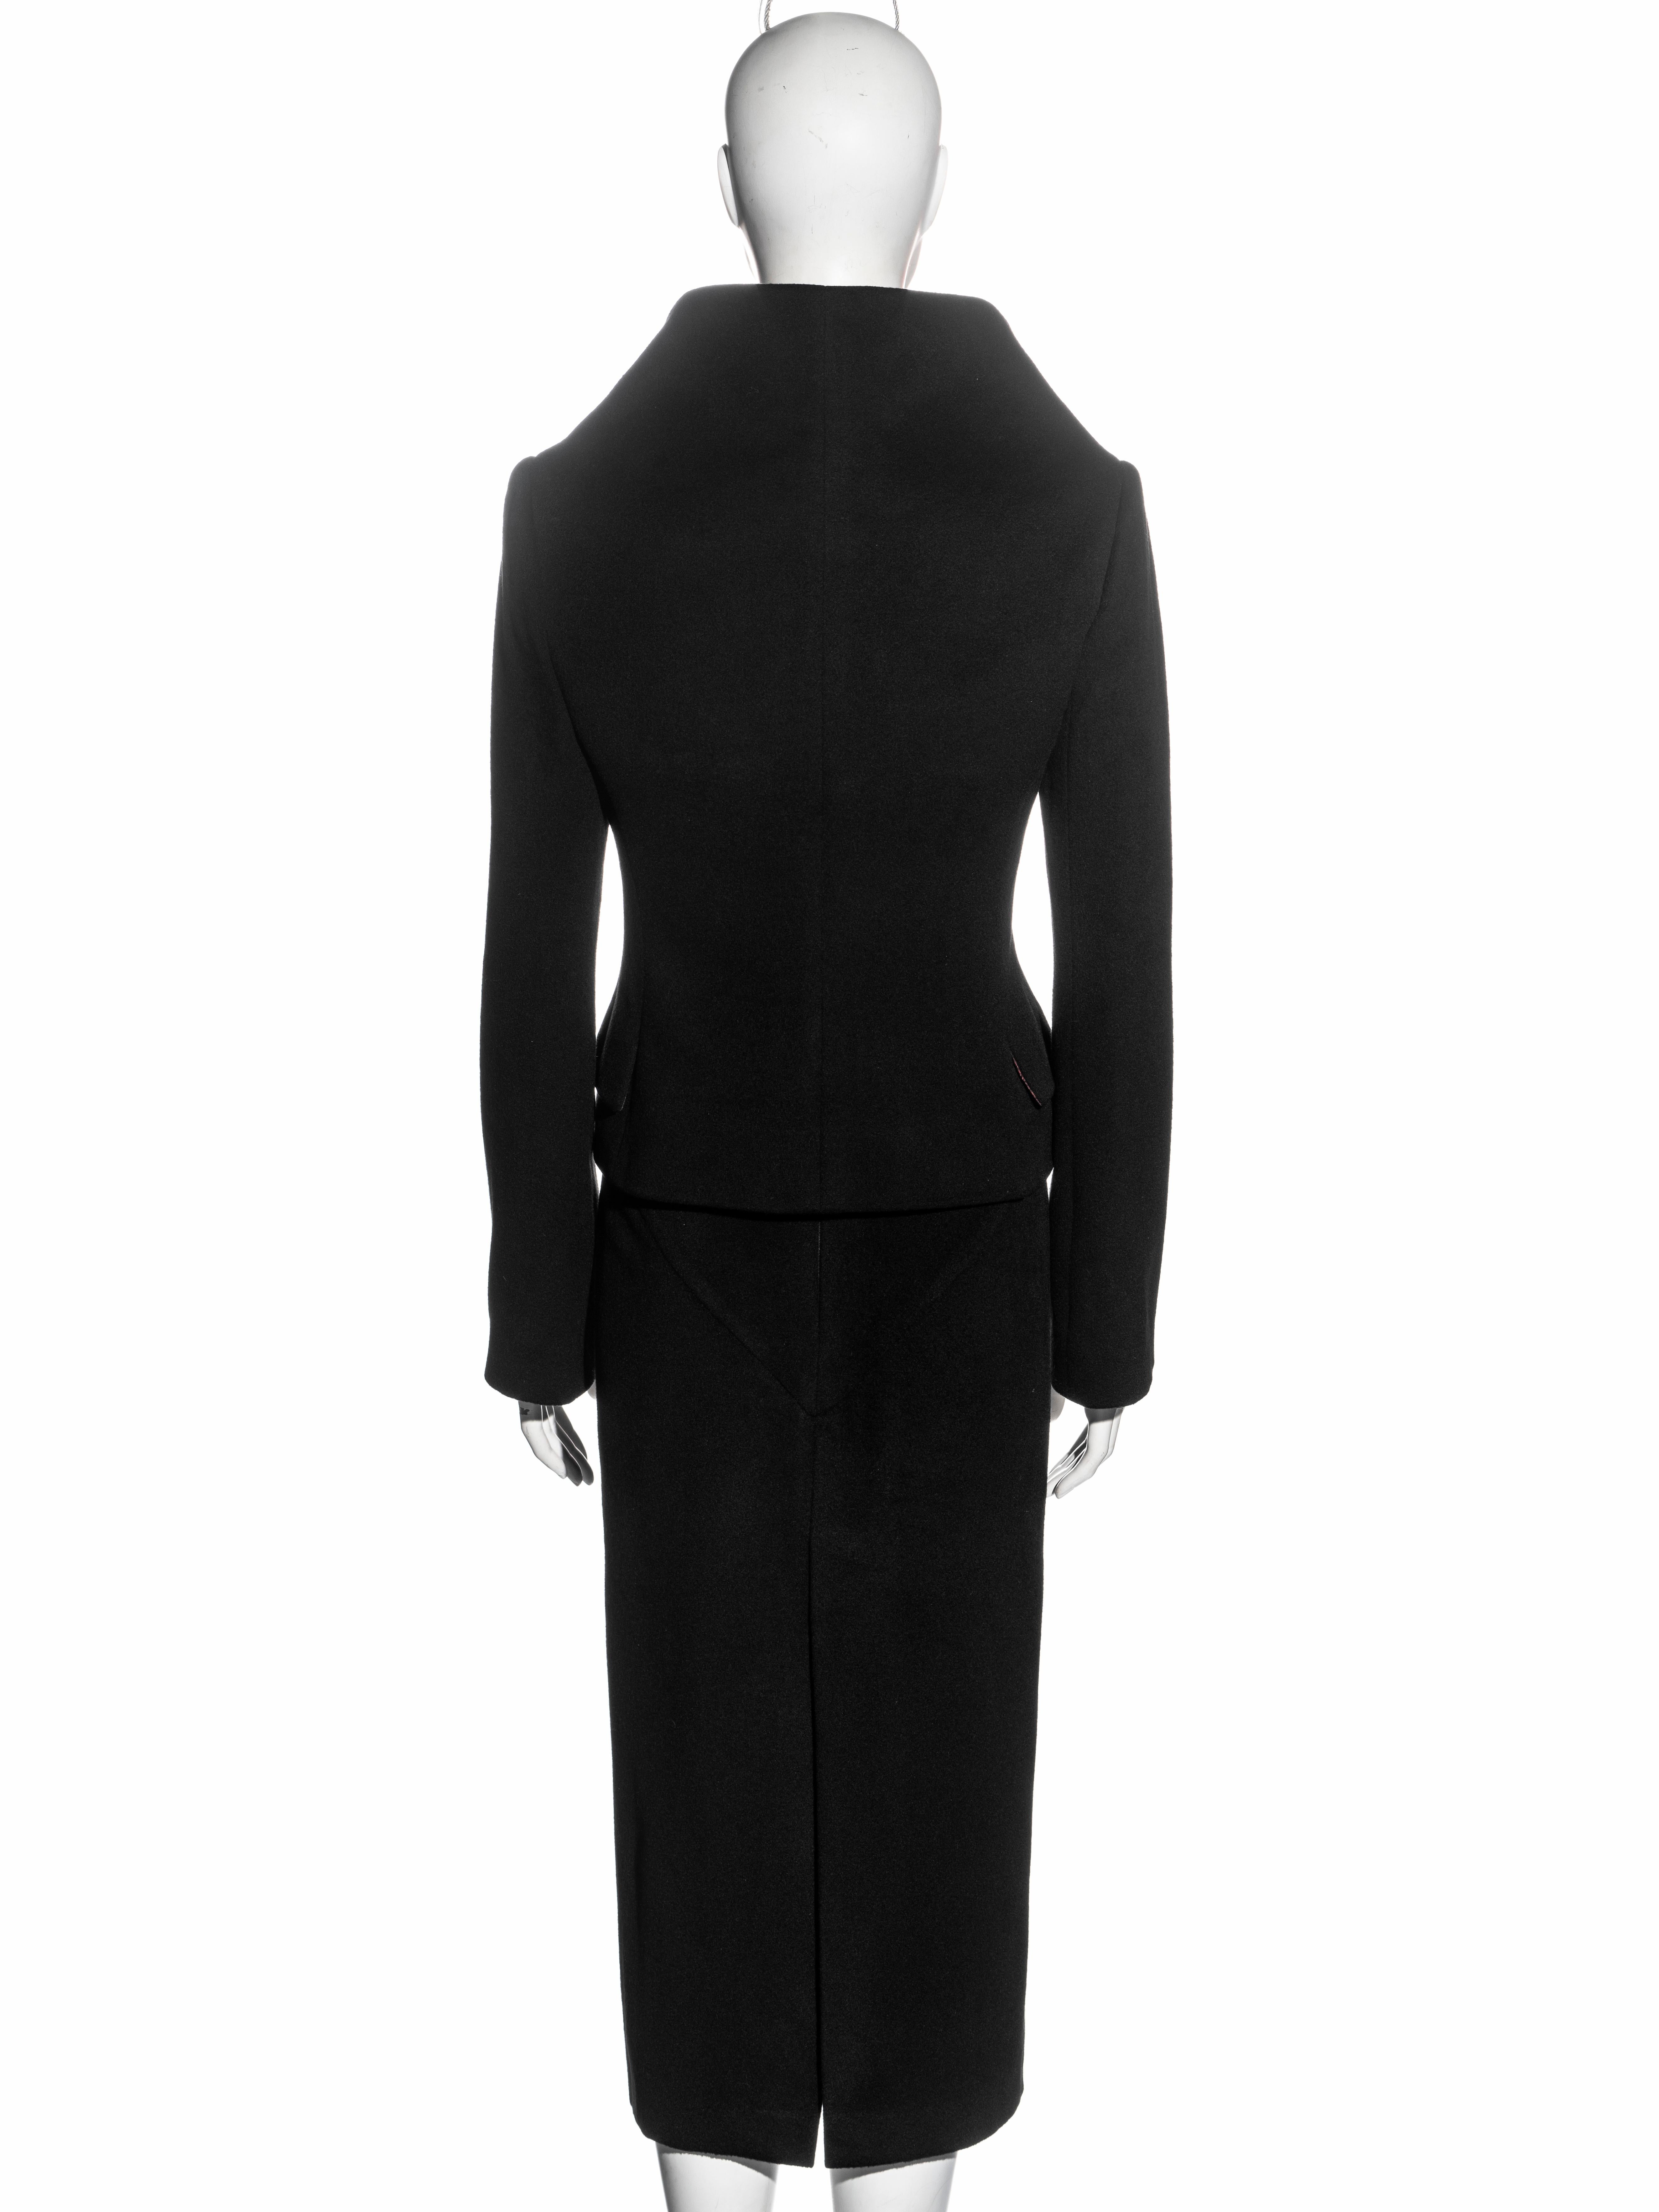 Alexander McQueen black cashmere 'Joan' jacket and skirt suit, fw 1998 9